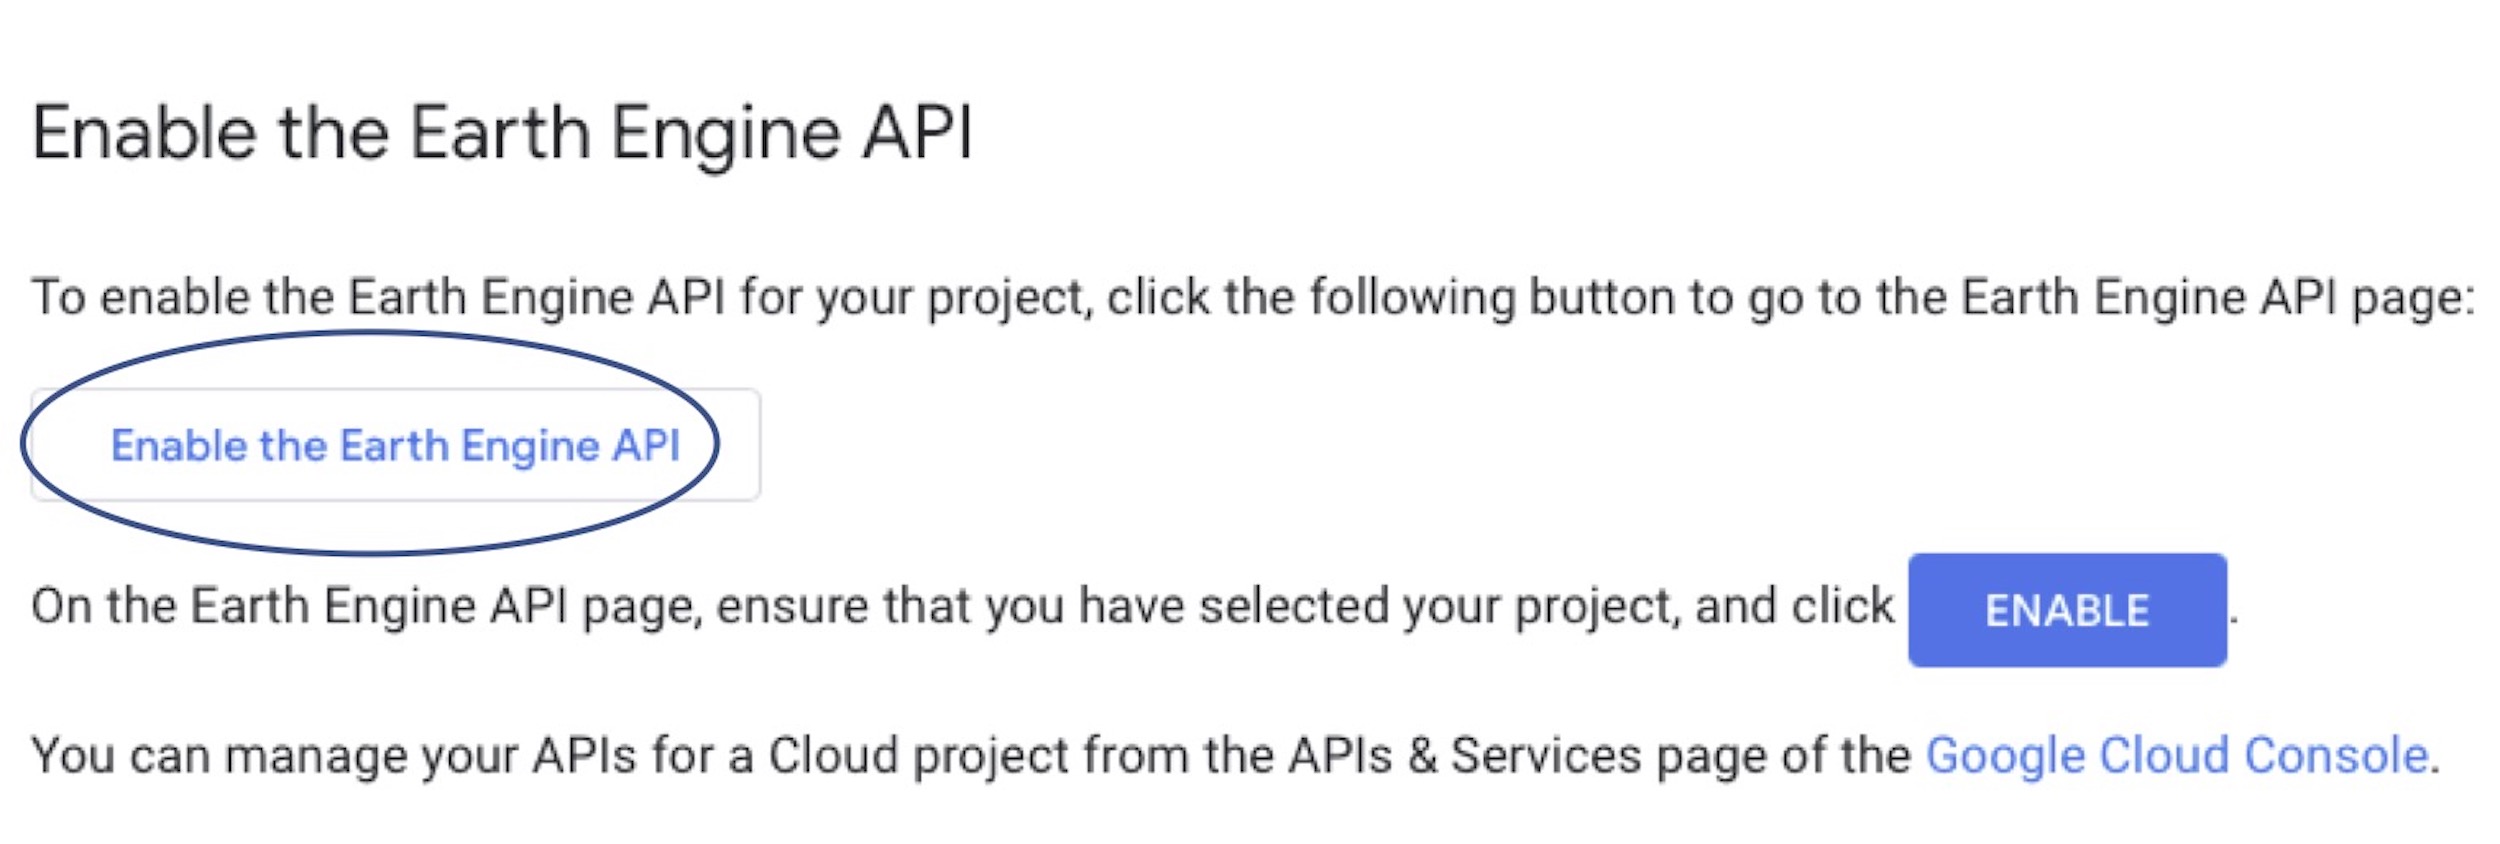 Enable EE API page screenshot